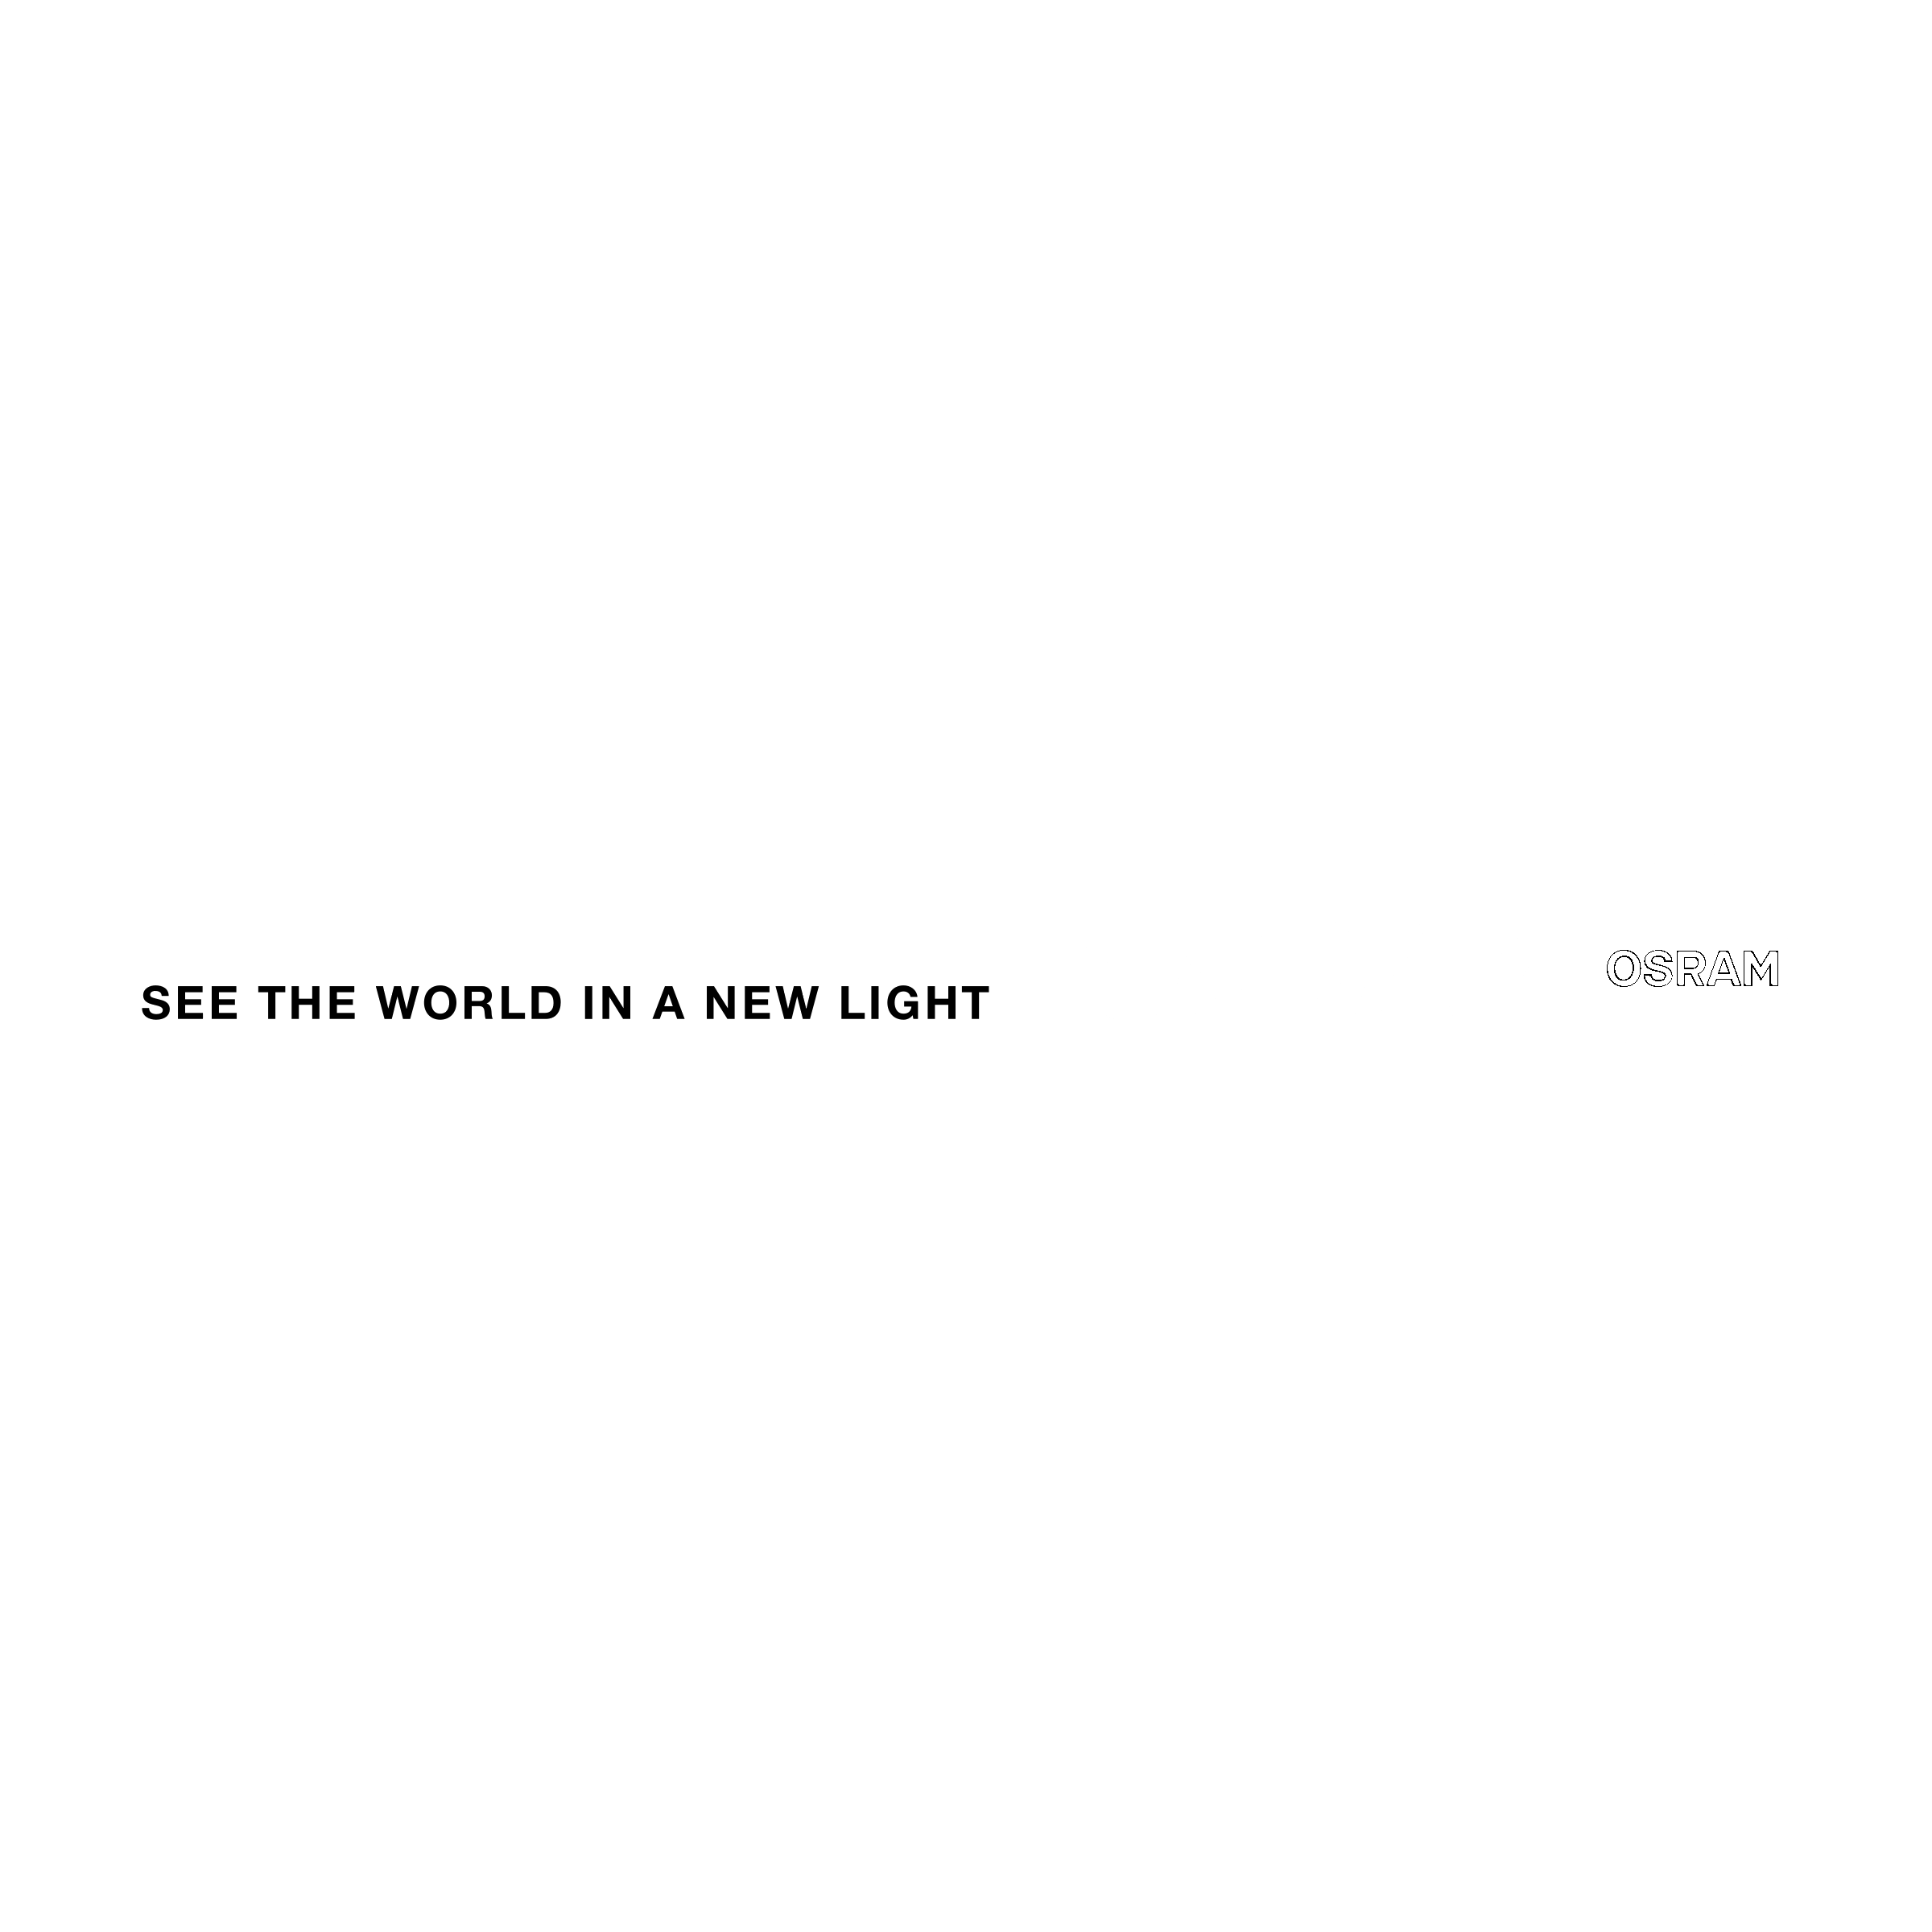 Osram Logo - Osram Logo PNG Transparent & SVG Vector - Freebie Supply